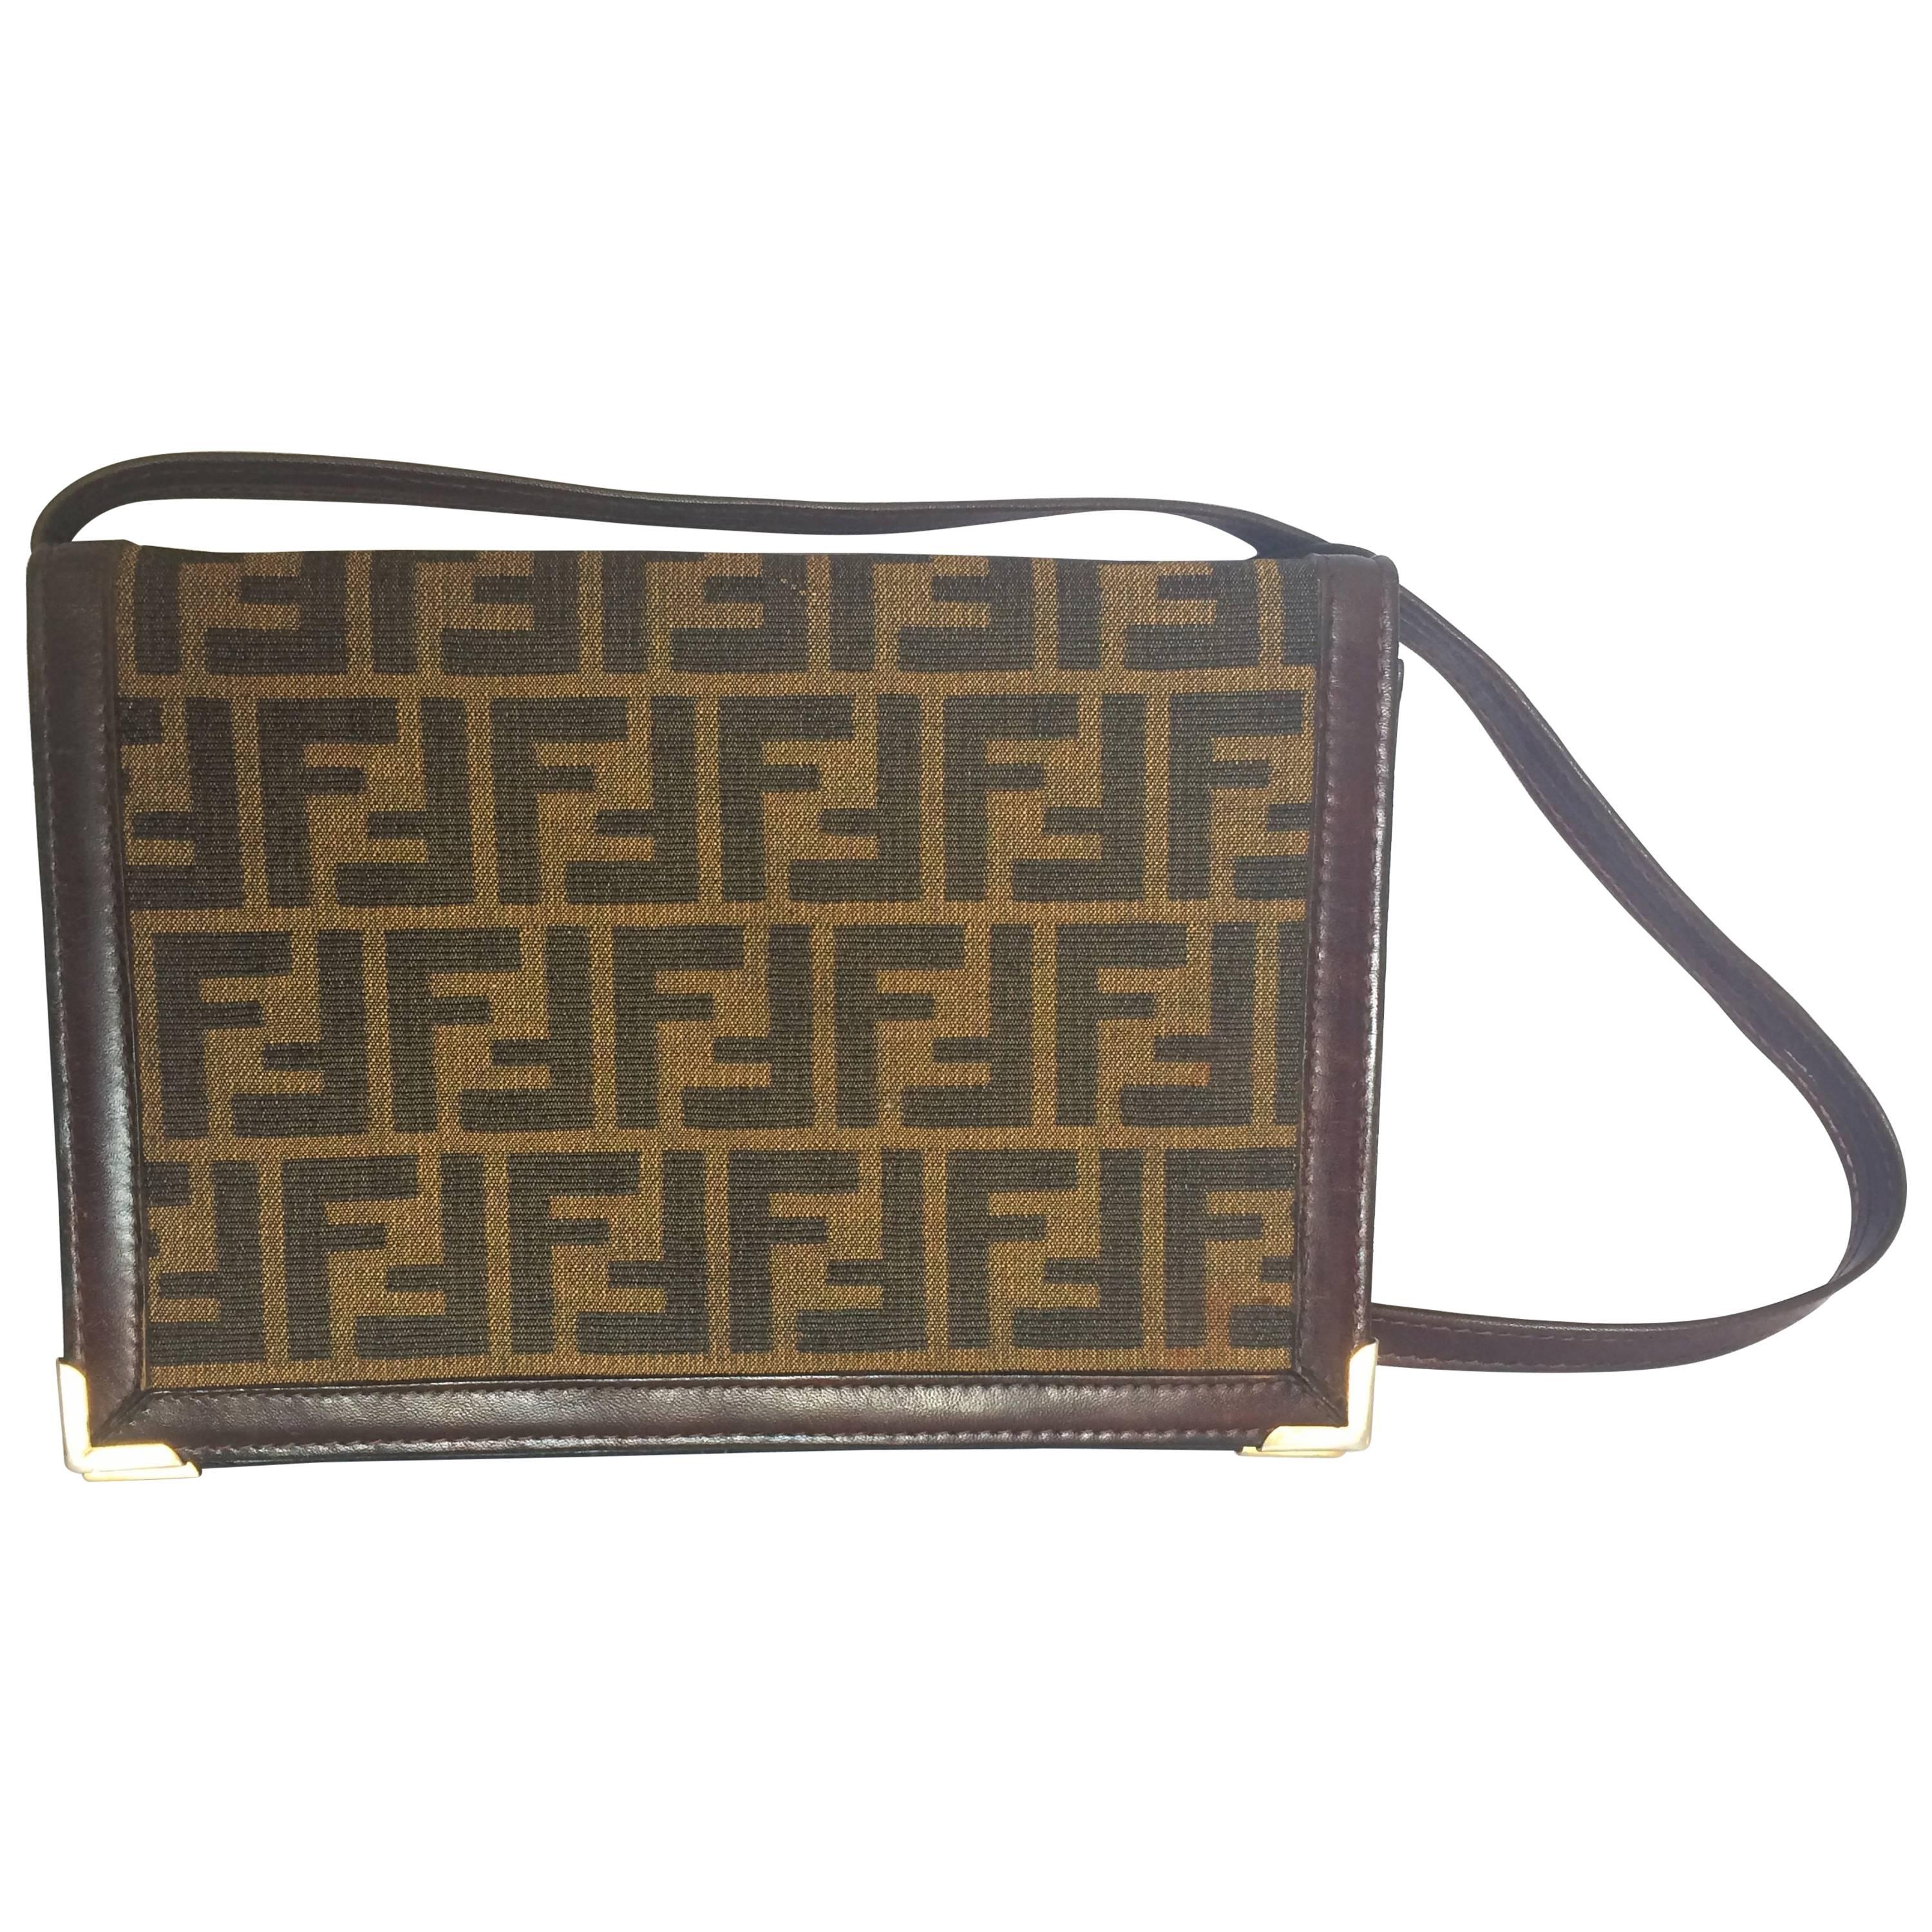 Vintage Fendi jacquard fabric shoulder purse, clutch bag with leather trimmings.